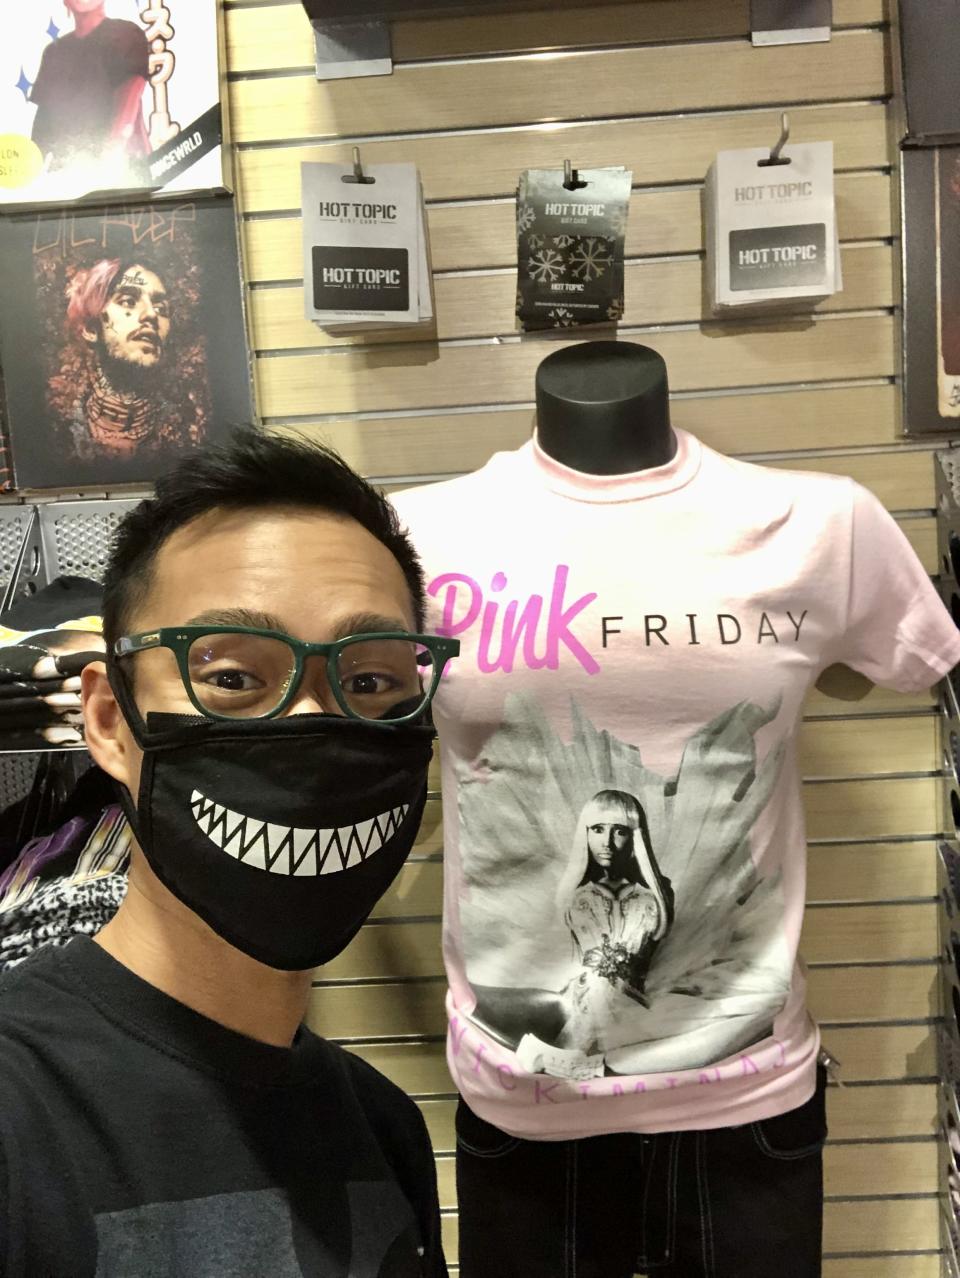 Author posing with a Nicki Minaj "Pink Friday" shirt